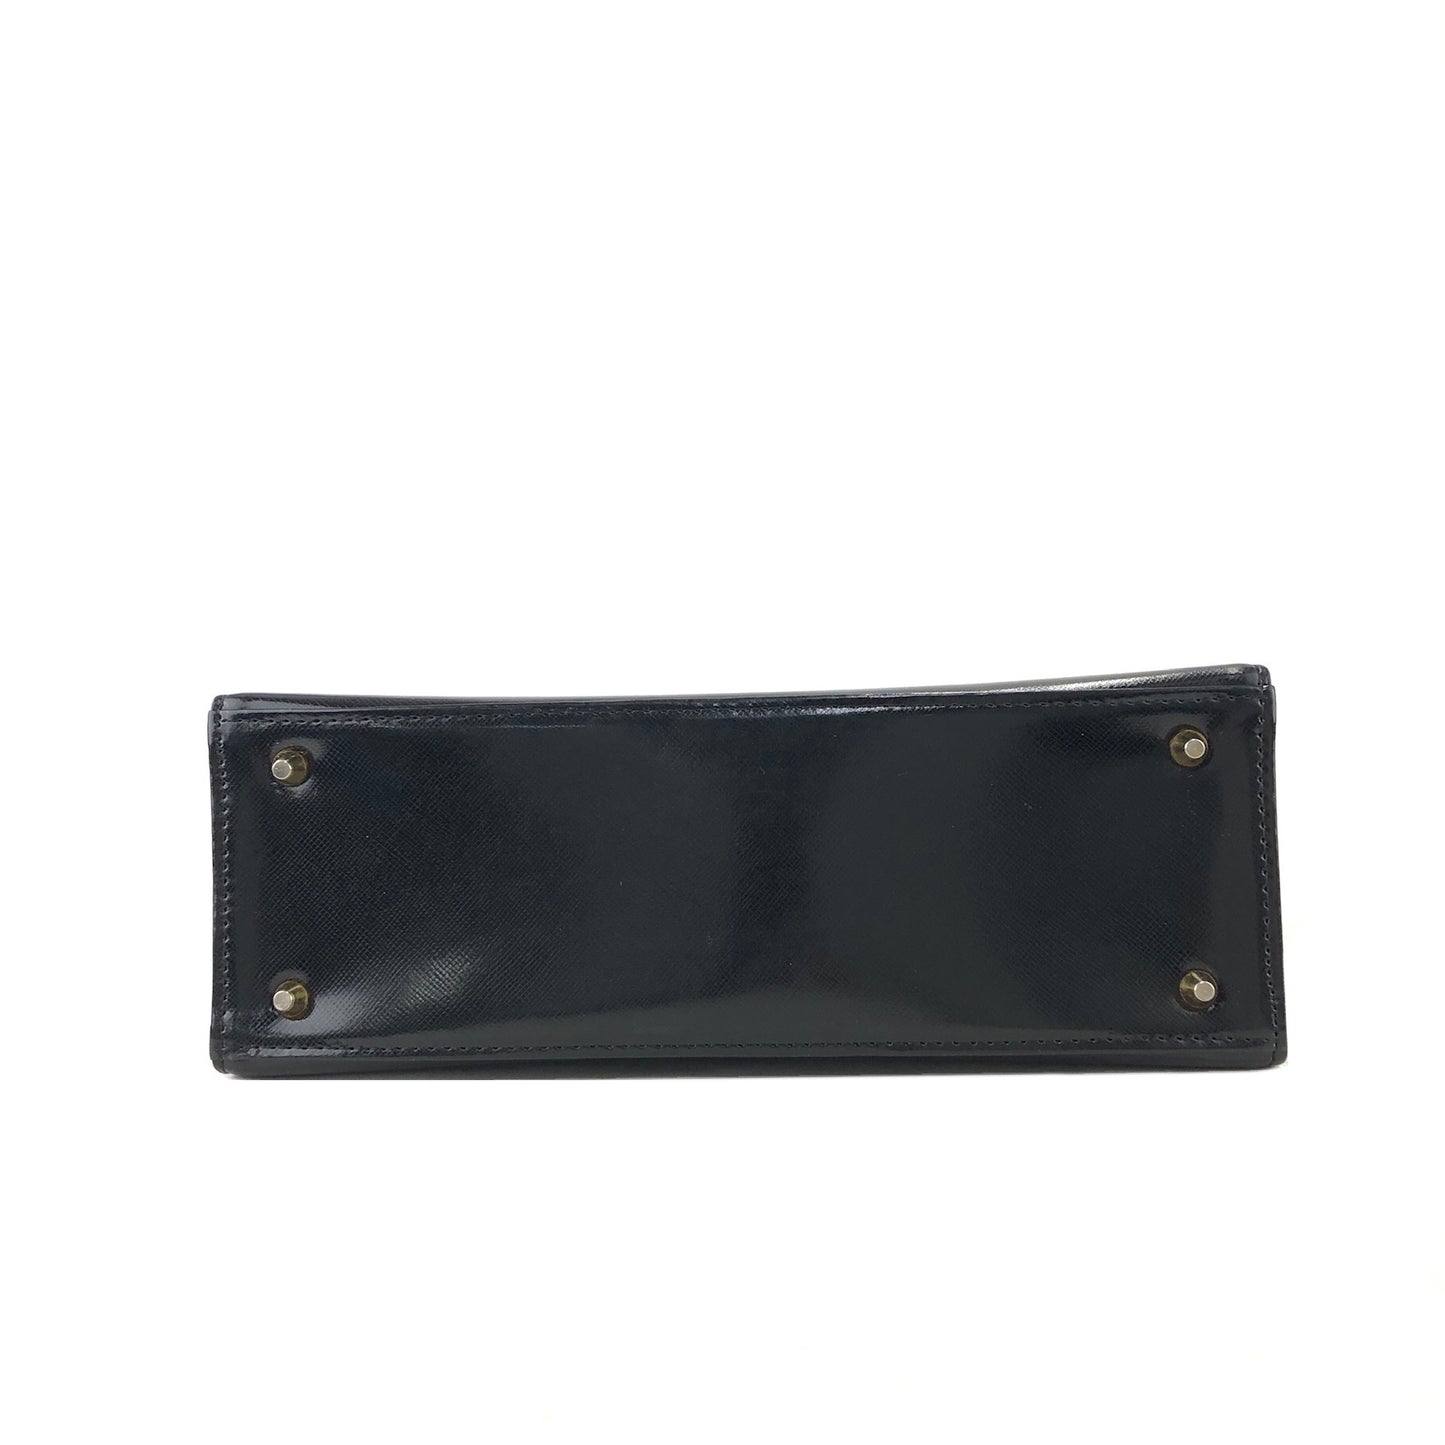 Yves Saint Laurent Logo Metal Bar Handle Leather Handbag Black Vintage vgabsa